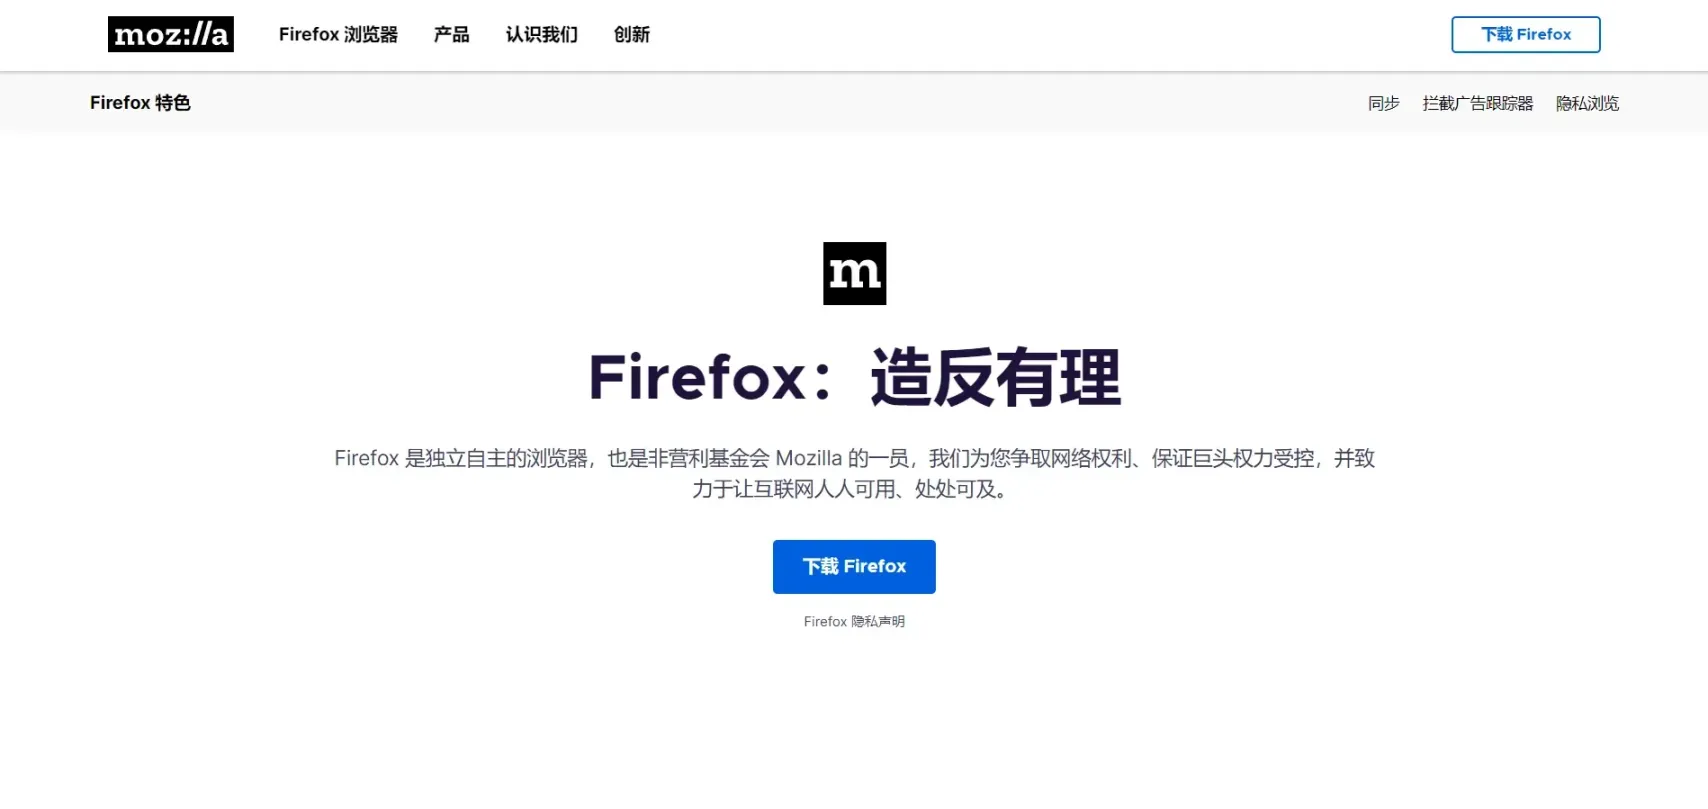 Firefox某一年的宣传页面，现在被换掉了